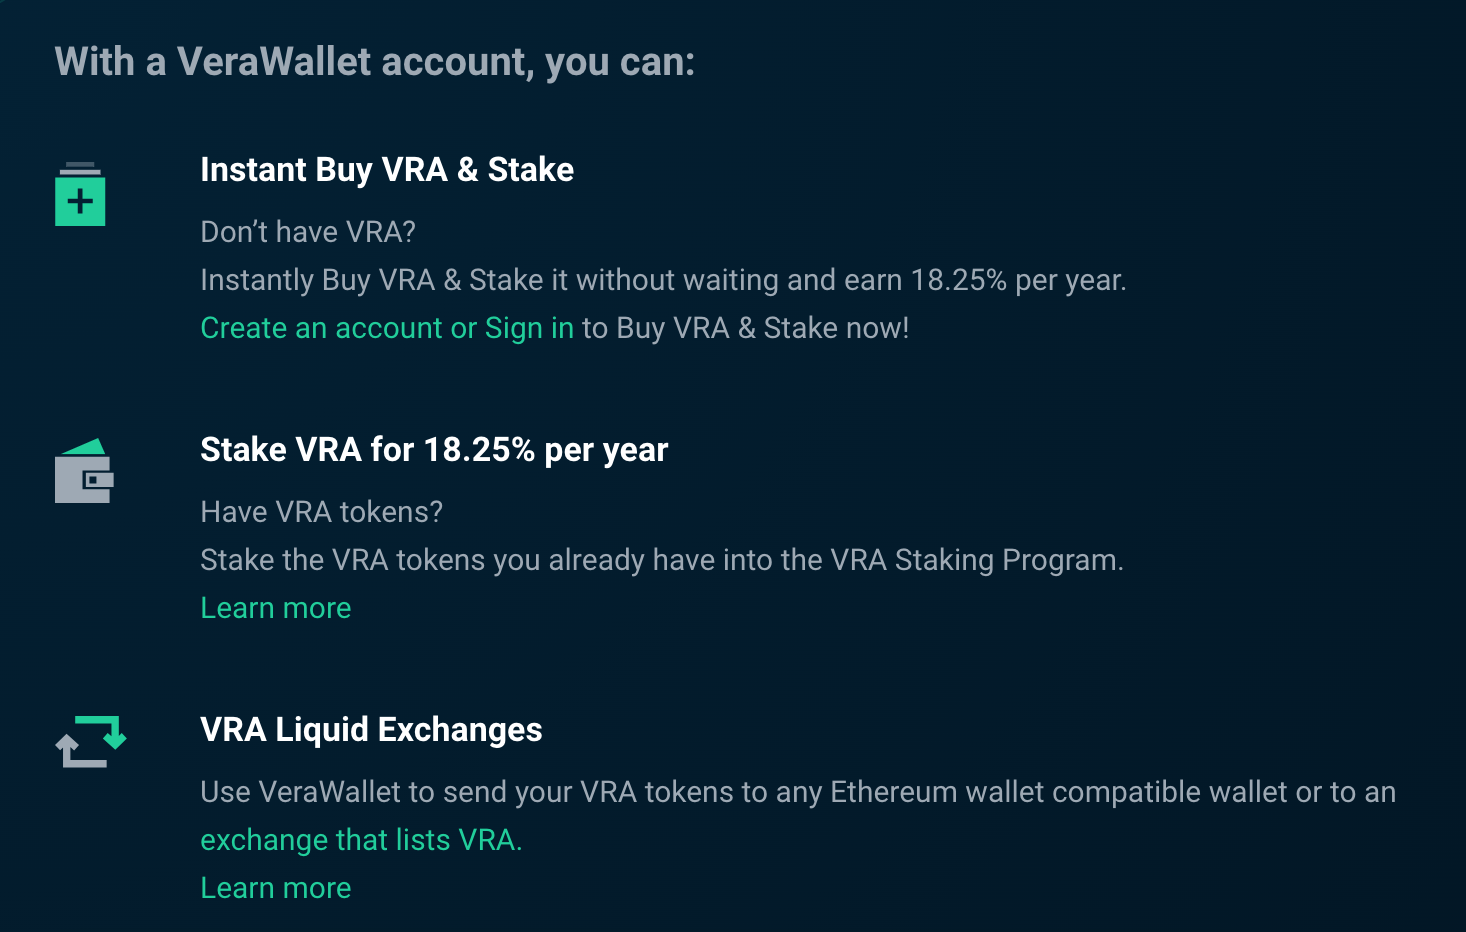 VeraWallet offers excellent staking returns on VRA tokens